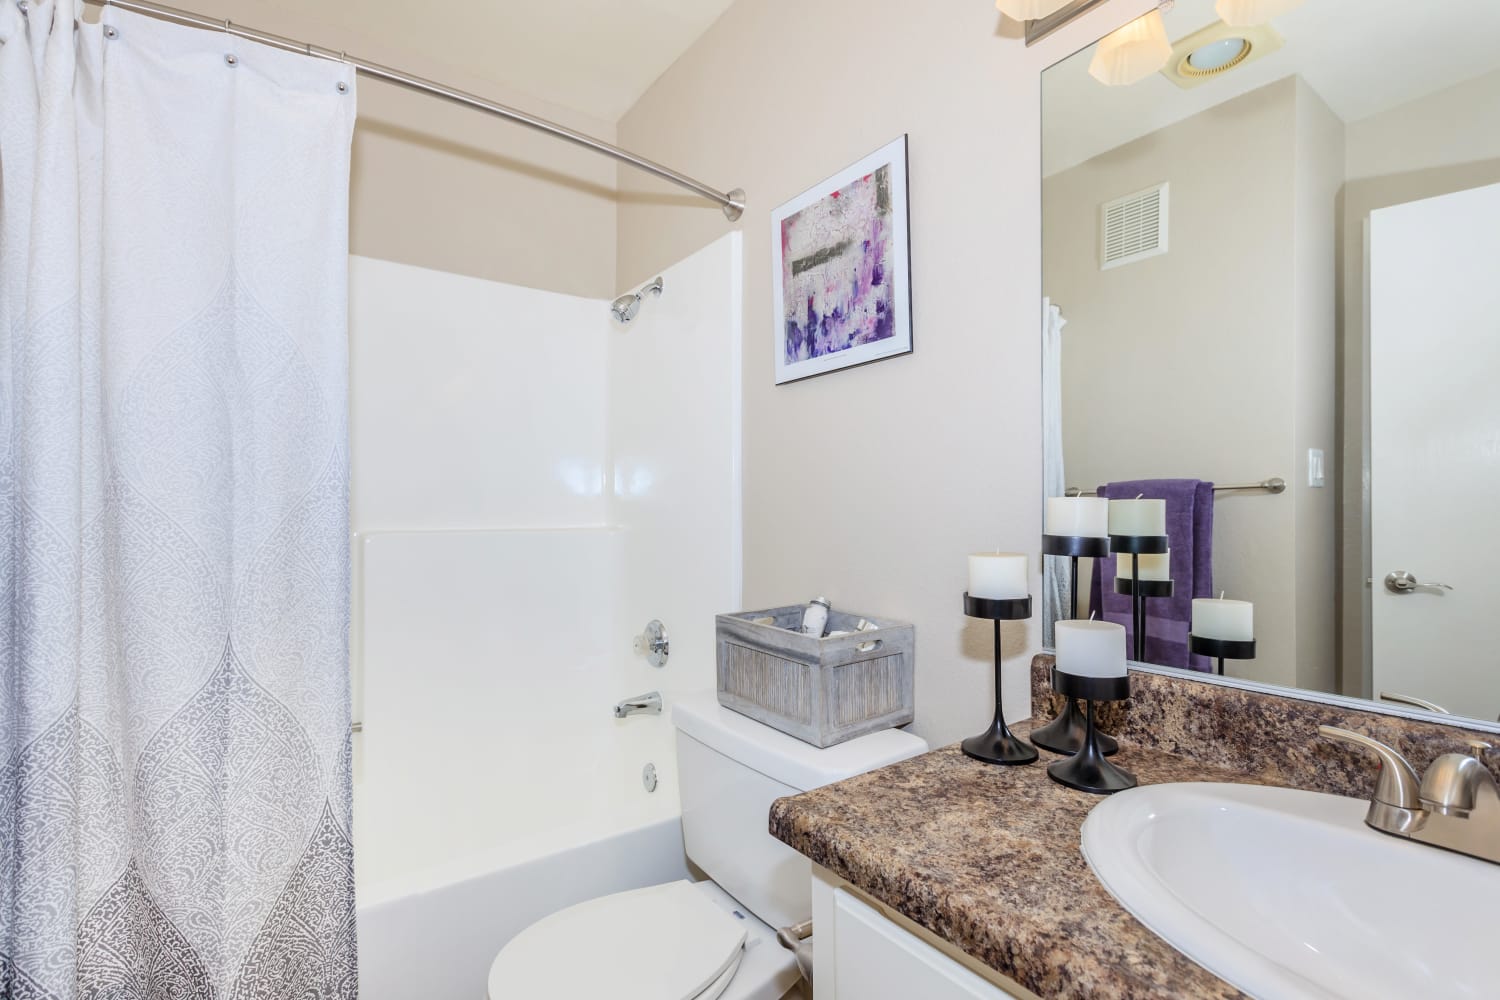 Clean and modern bathrooms at Parcwood Apartments in Corona, California